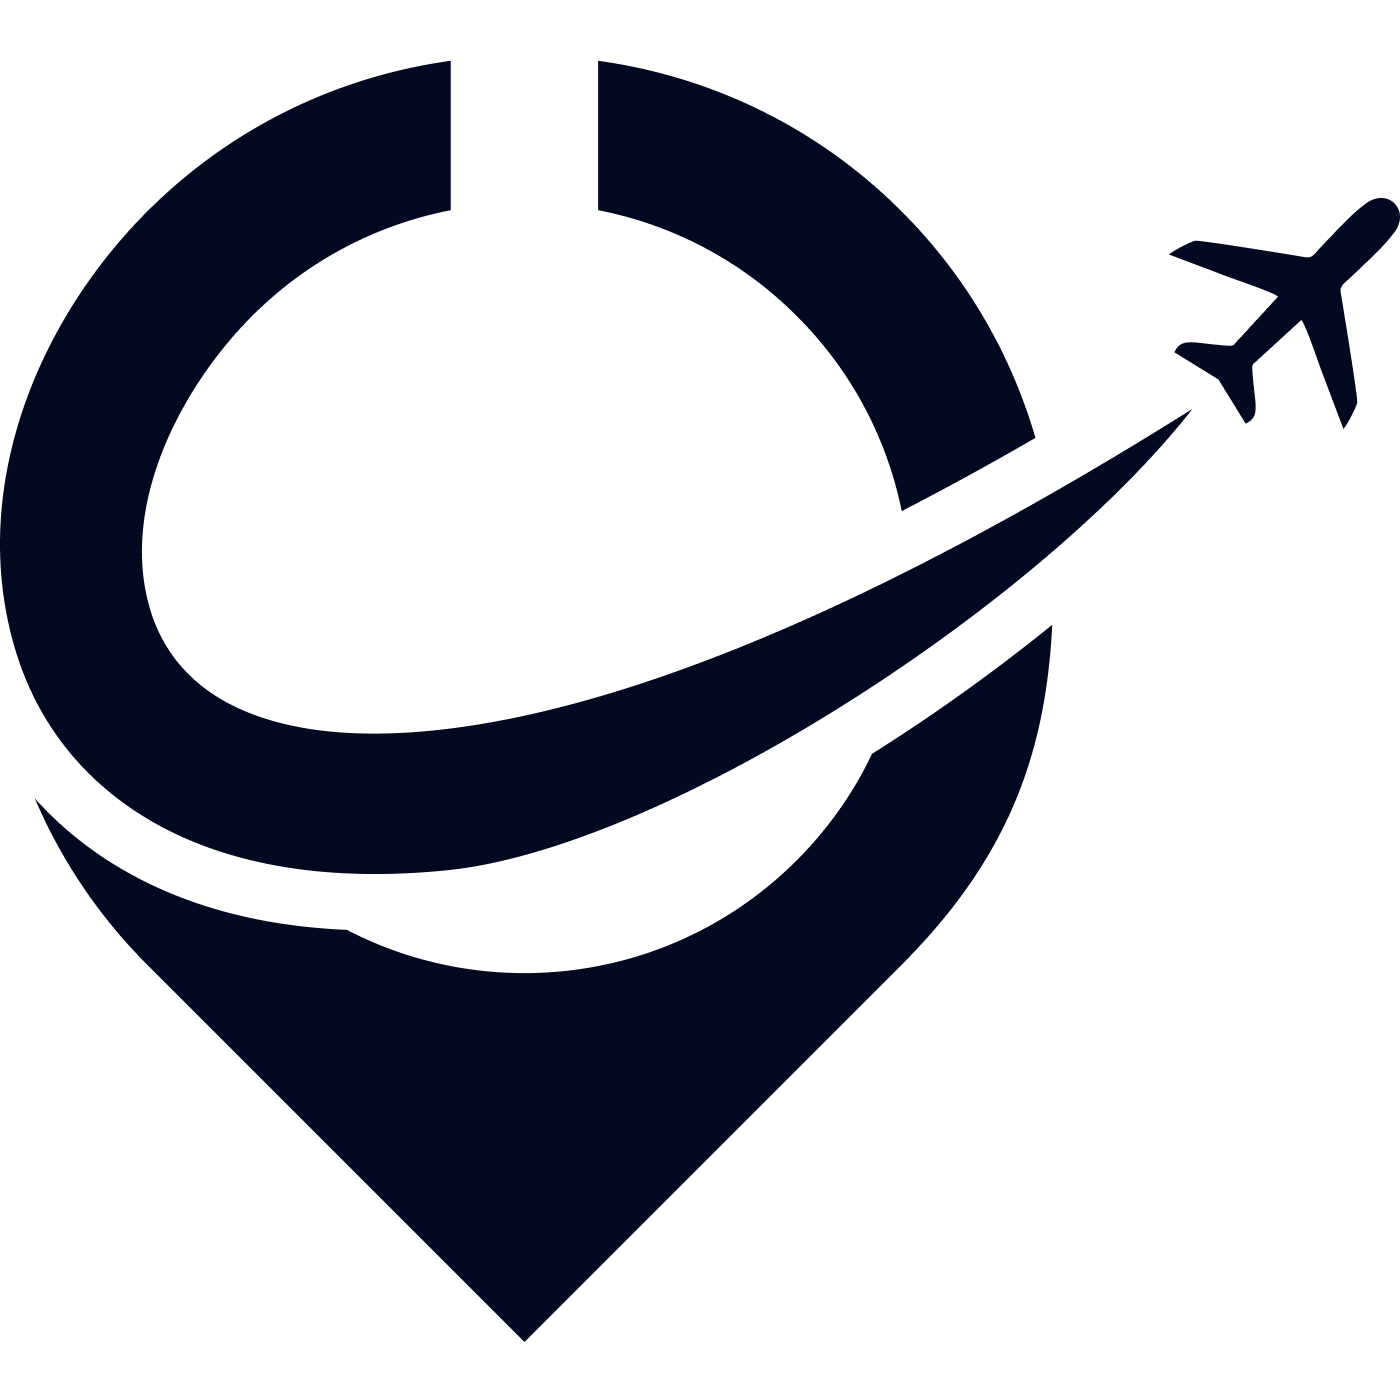 Logo05